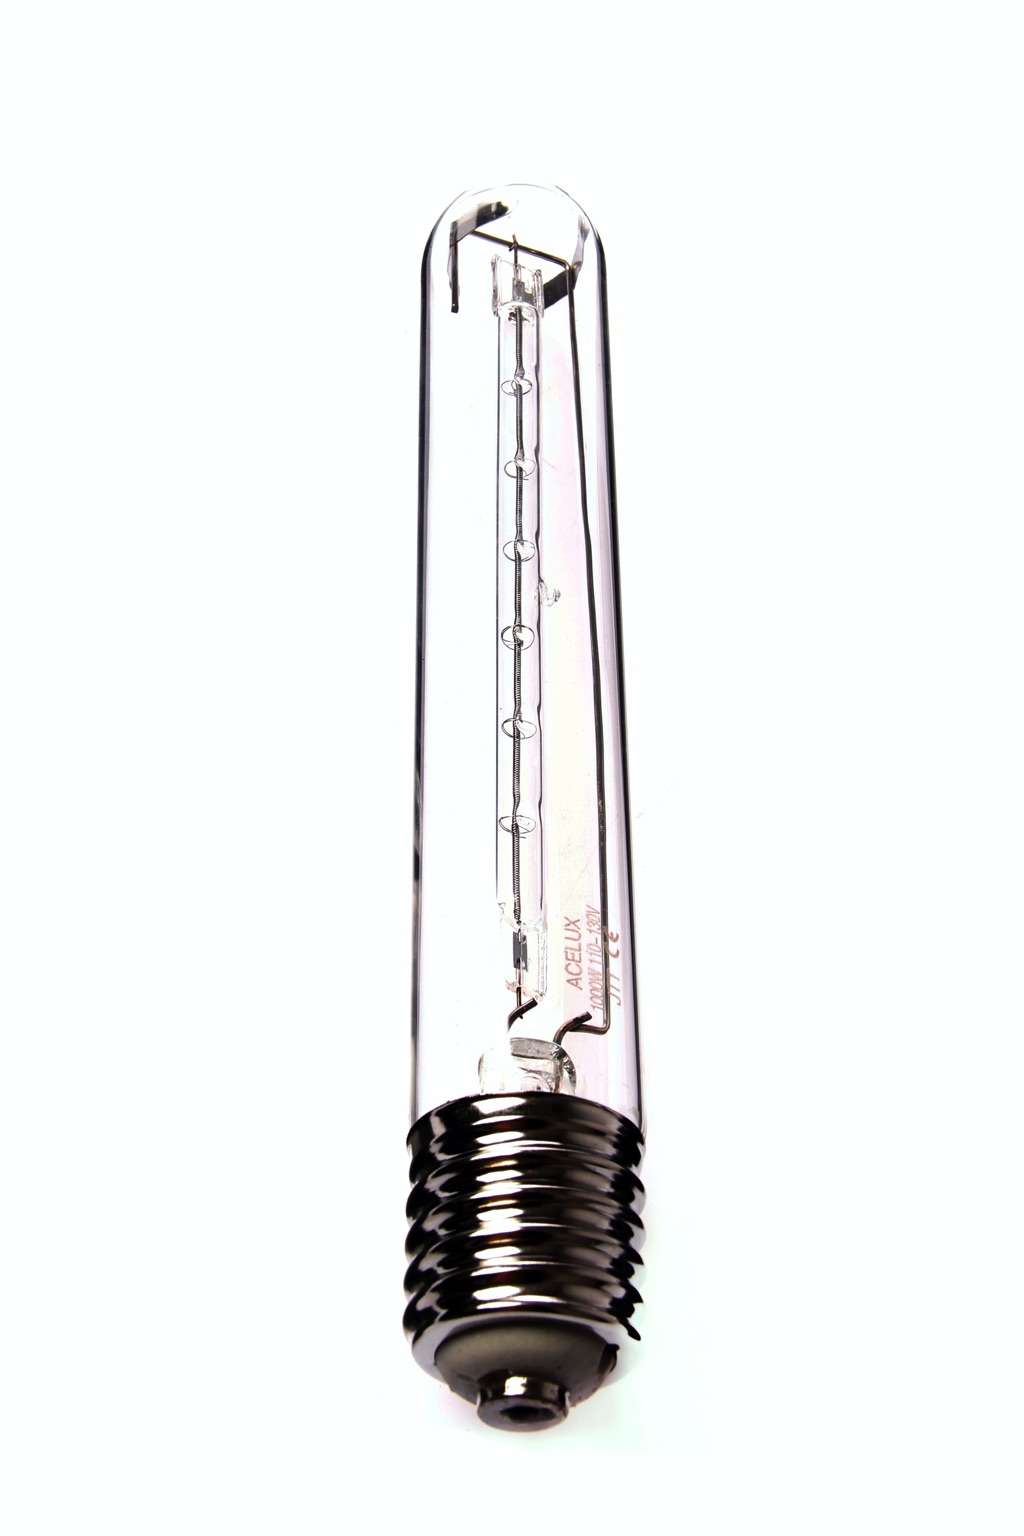 LAMP HALOGEN TUBULAR SHAPE, E40 220-240V 1000W - All Voltage Supply